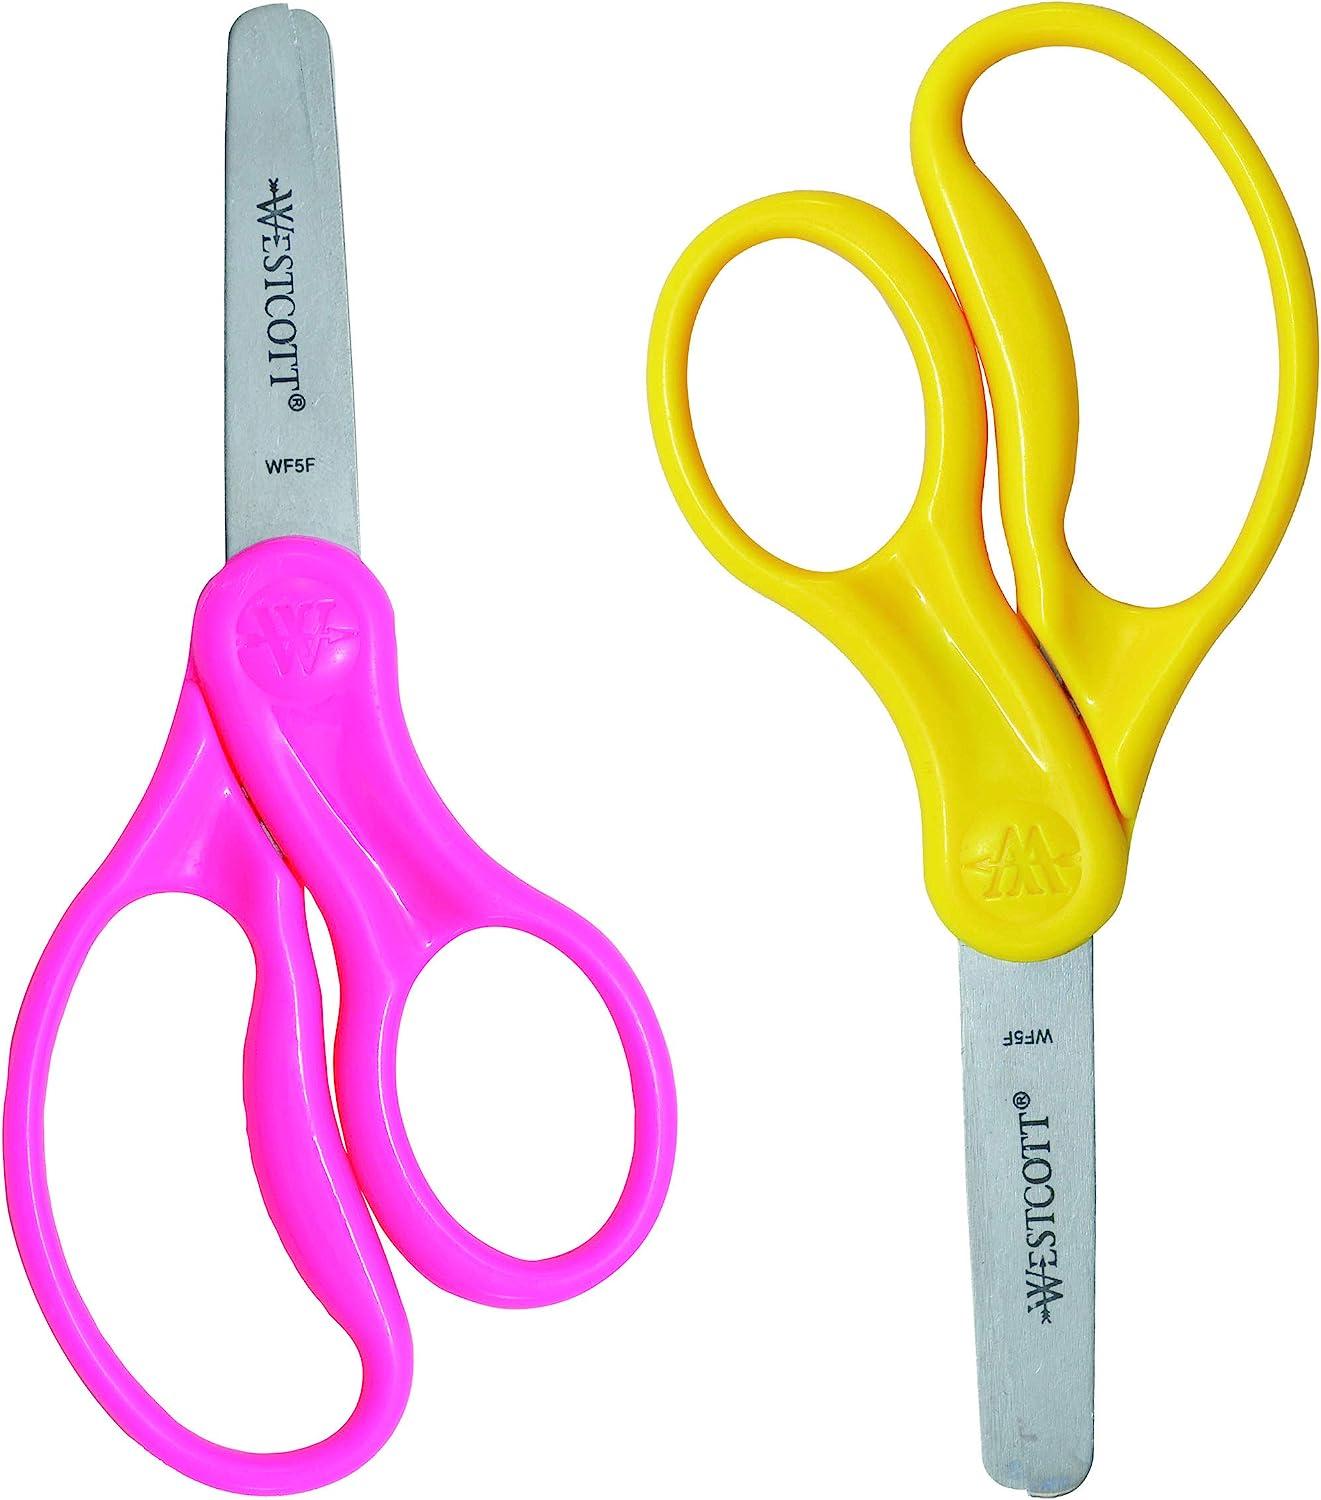 Plastic Childrens Scissors Crazy Cut Assorted Pack 4